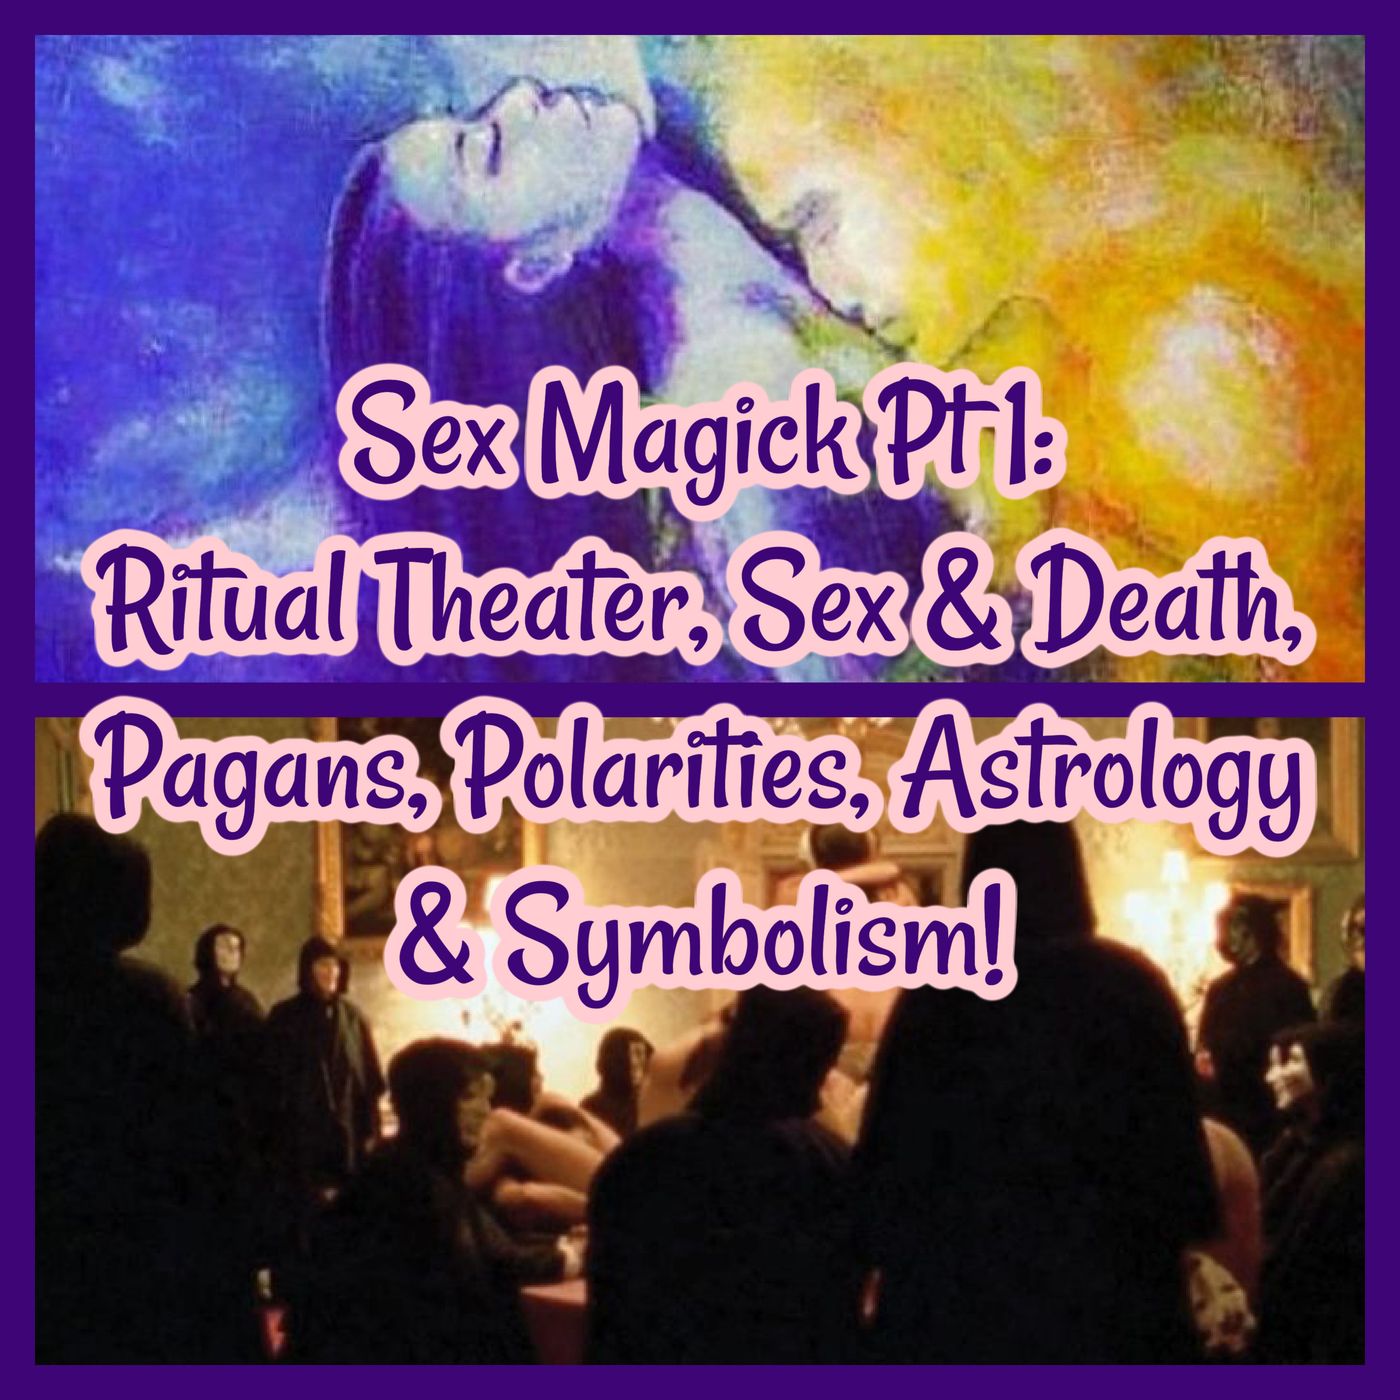 Sex Magick Pt 1: Ritual Theater, Sex & Death, Pagans, Polarities, Astrology & Symbolism!